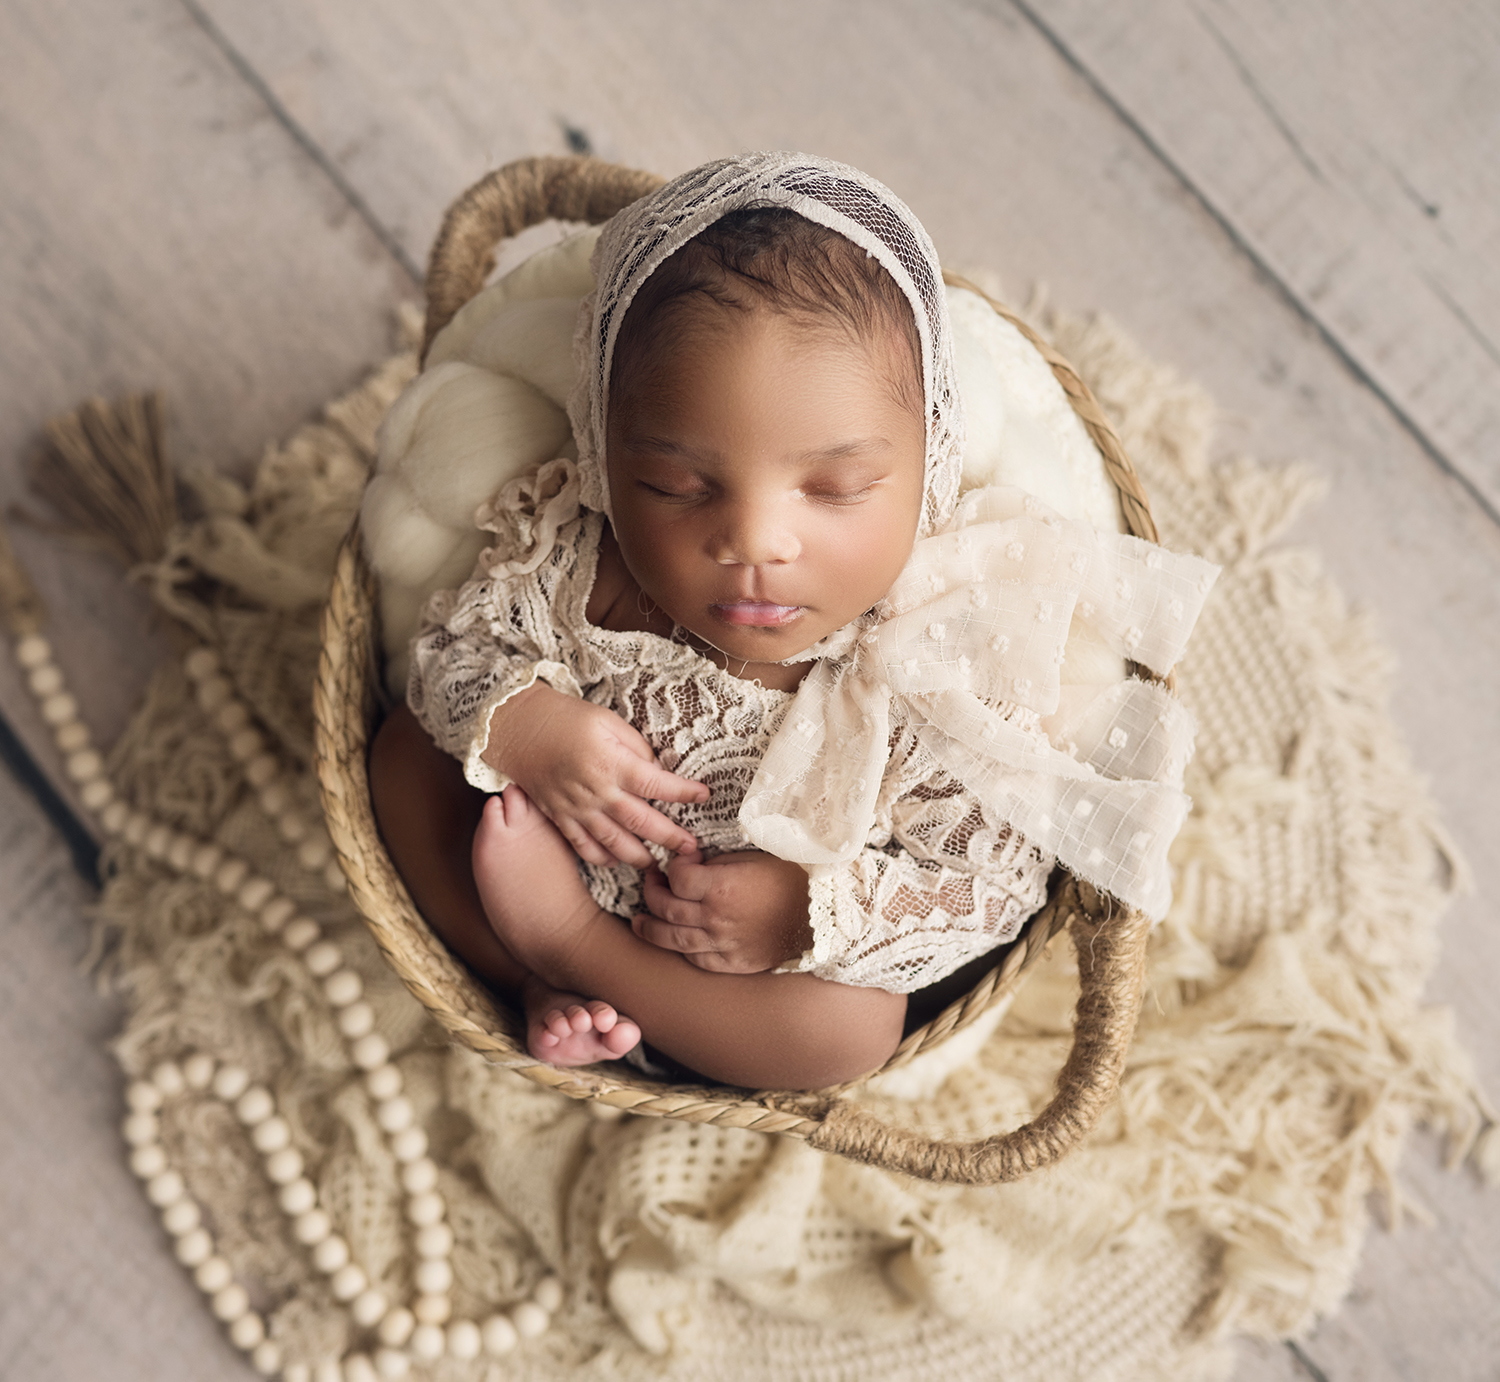 Beautiful Baby Sleeping in a Basket